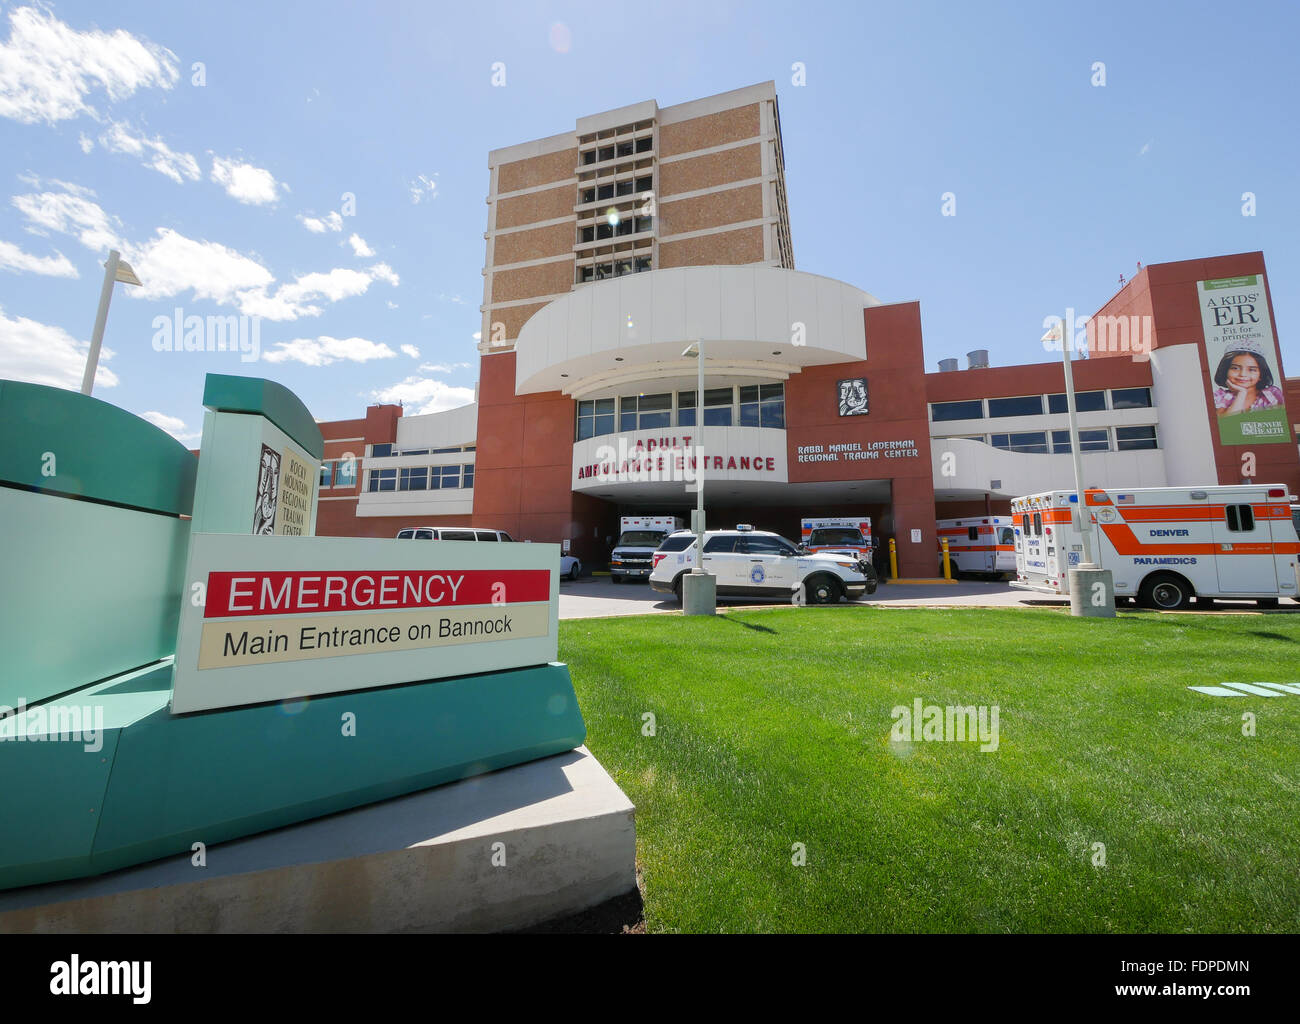 Denver Health Medical Center d'un grand hôpital public à Denver, Colorado Banque D'Images